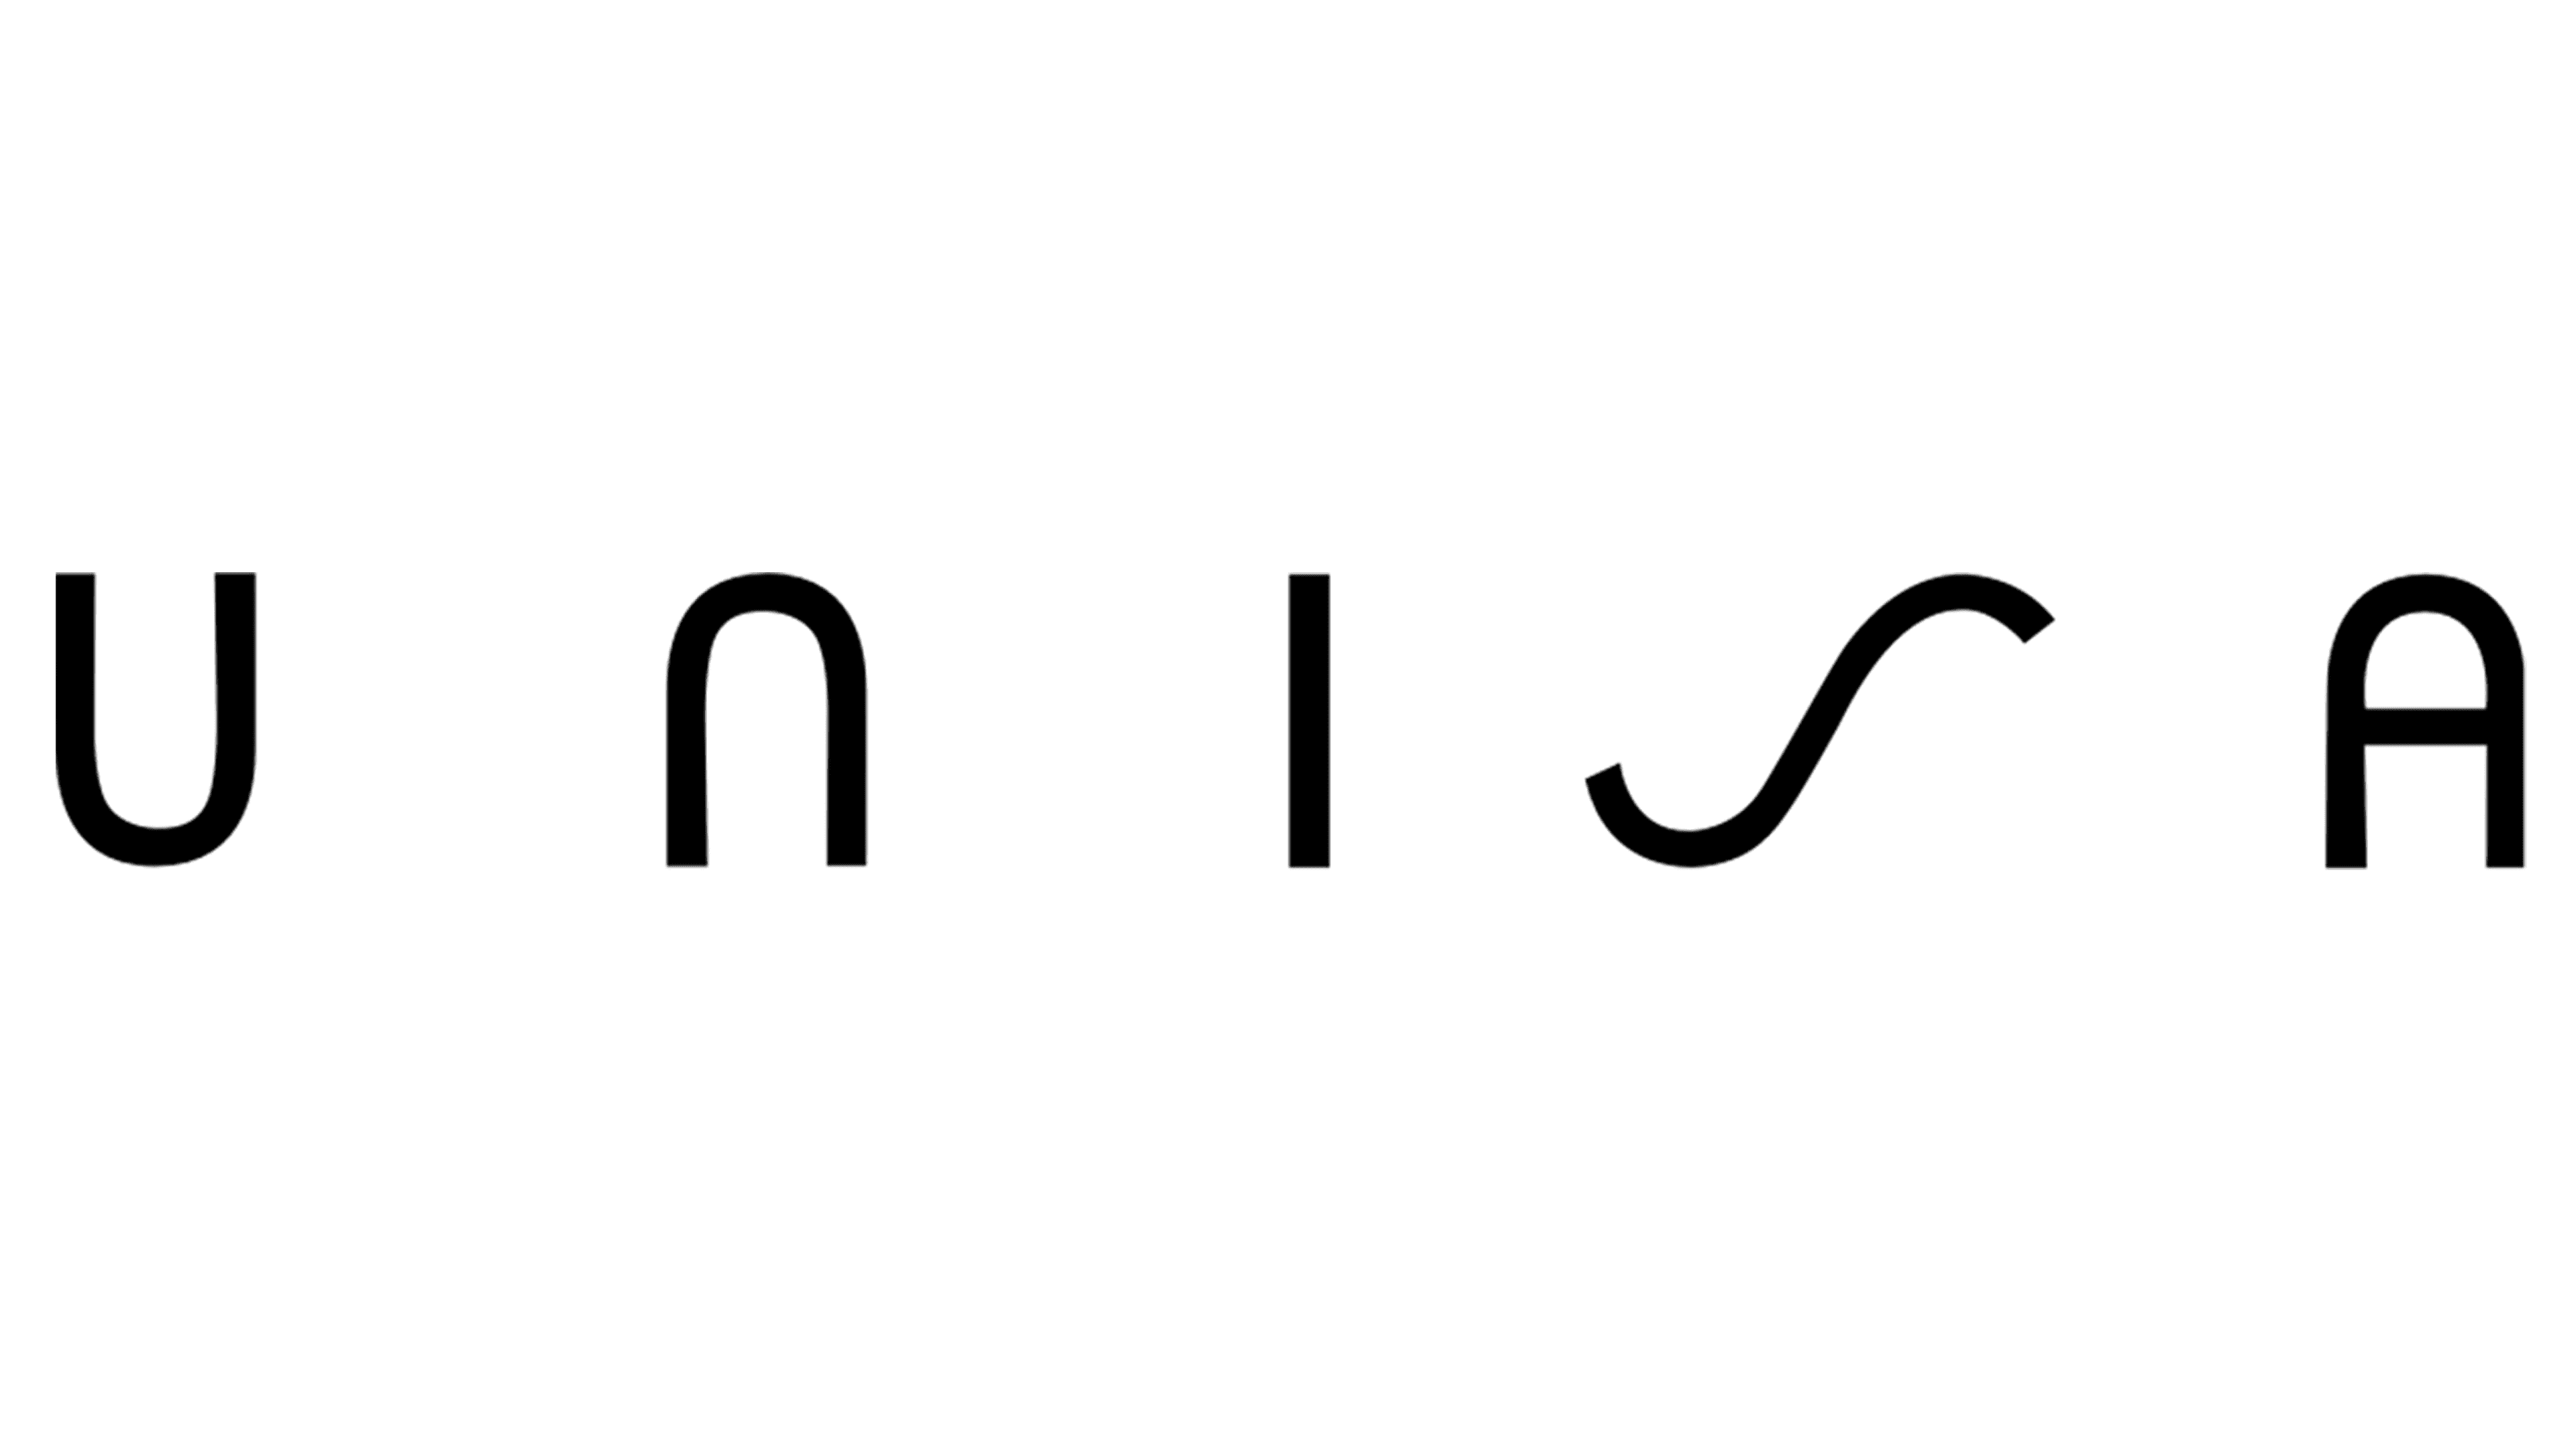 Unisa logo and symbol, PNG, brand